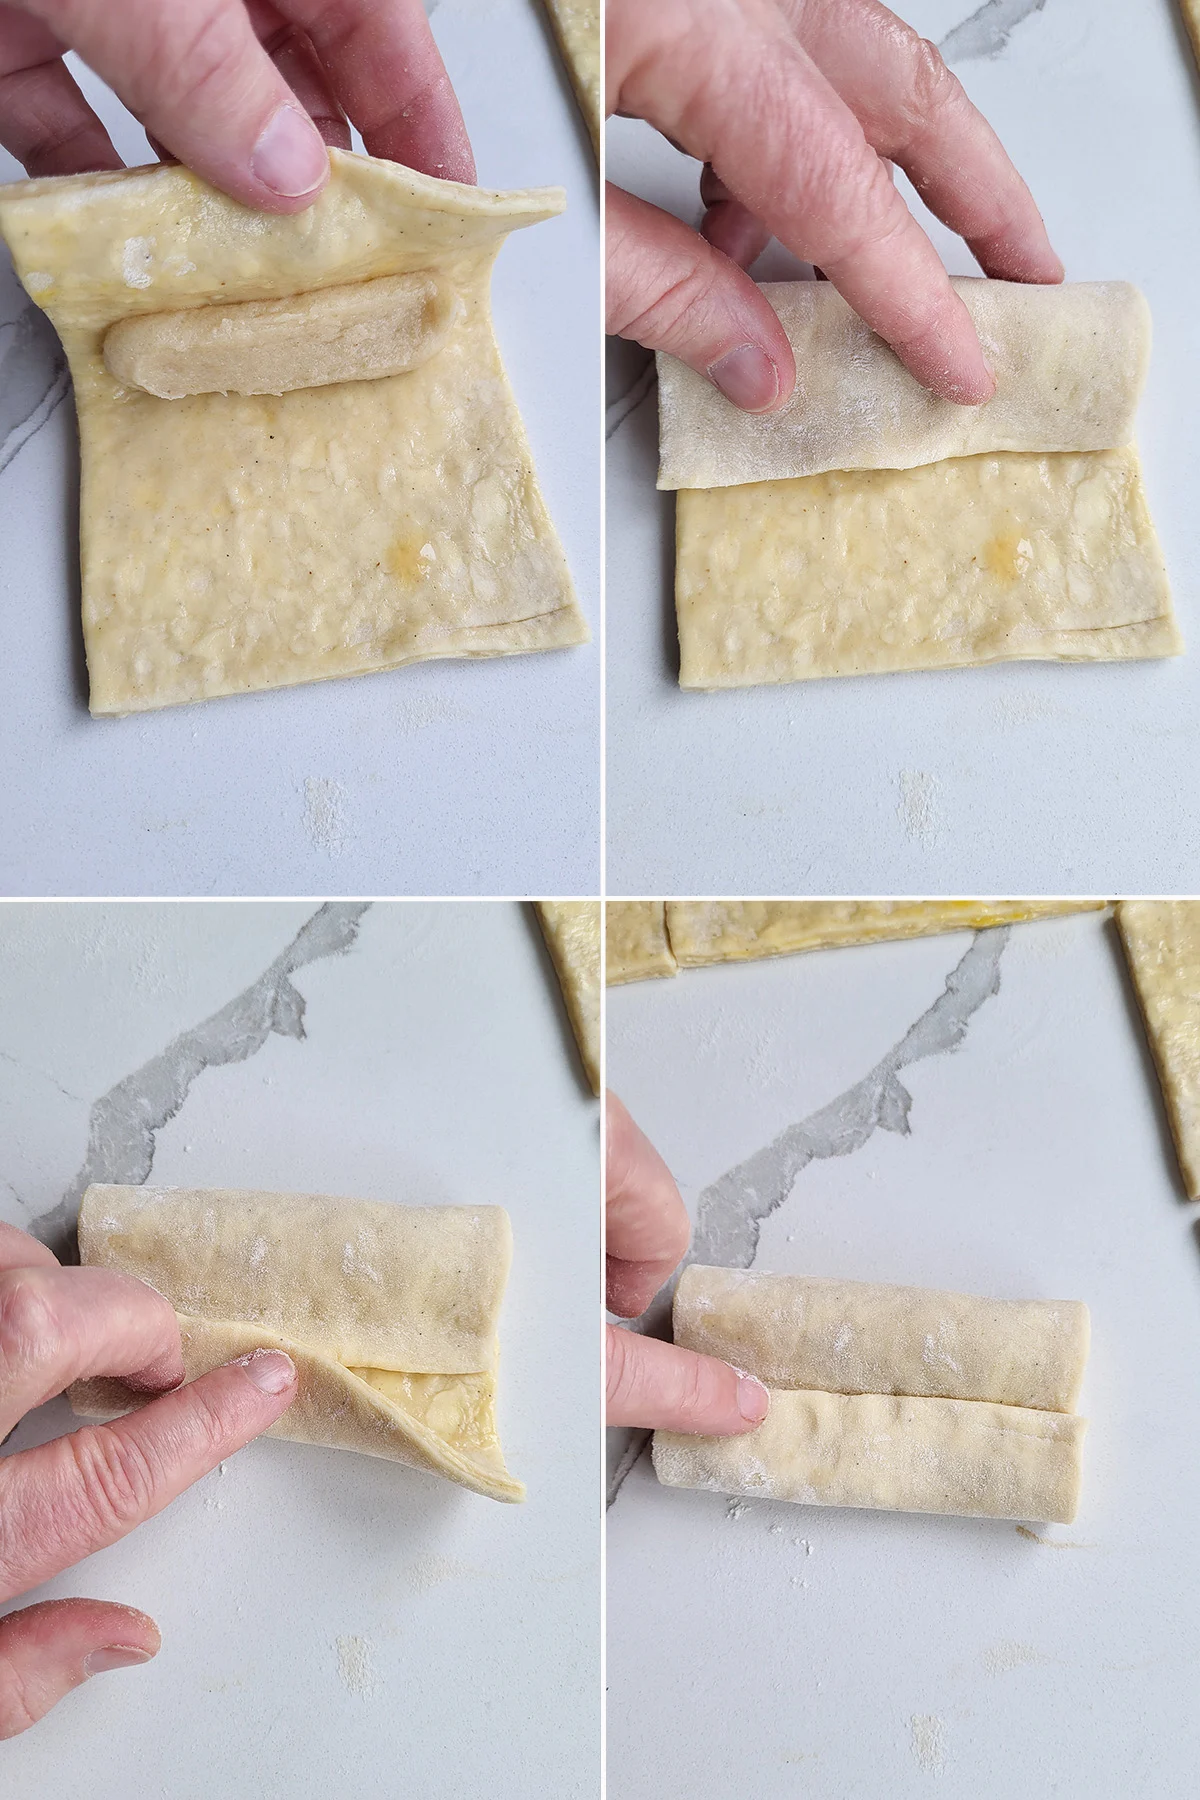 Folding danish dough over filling.